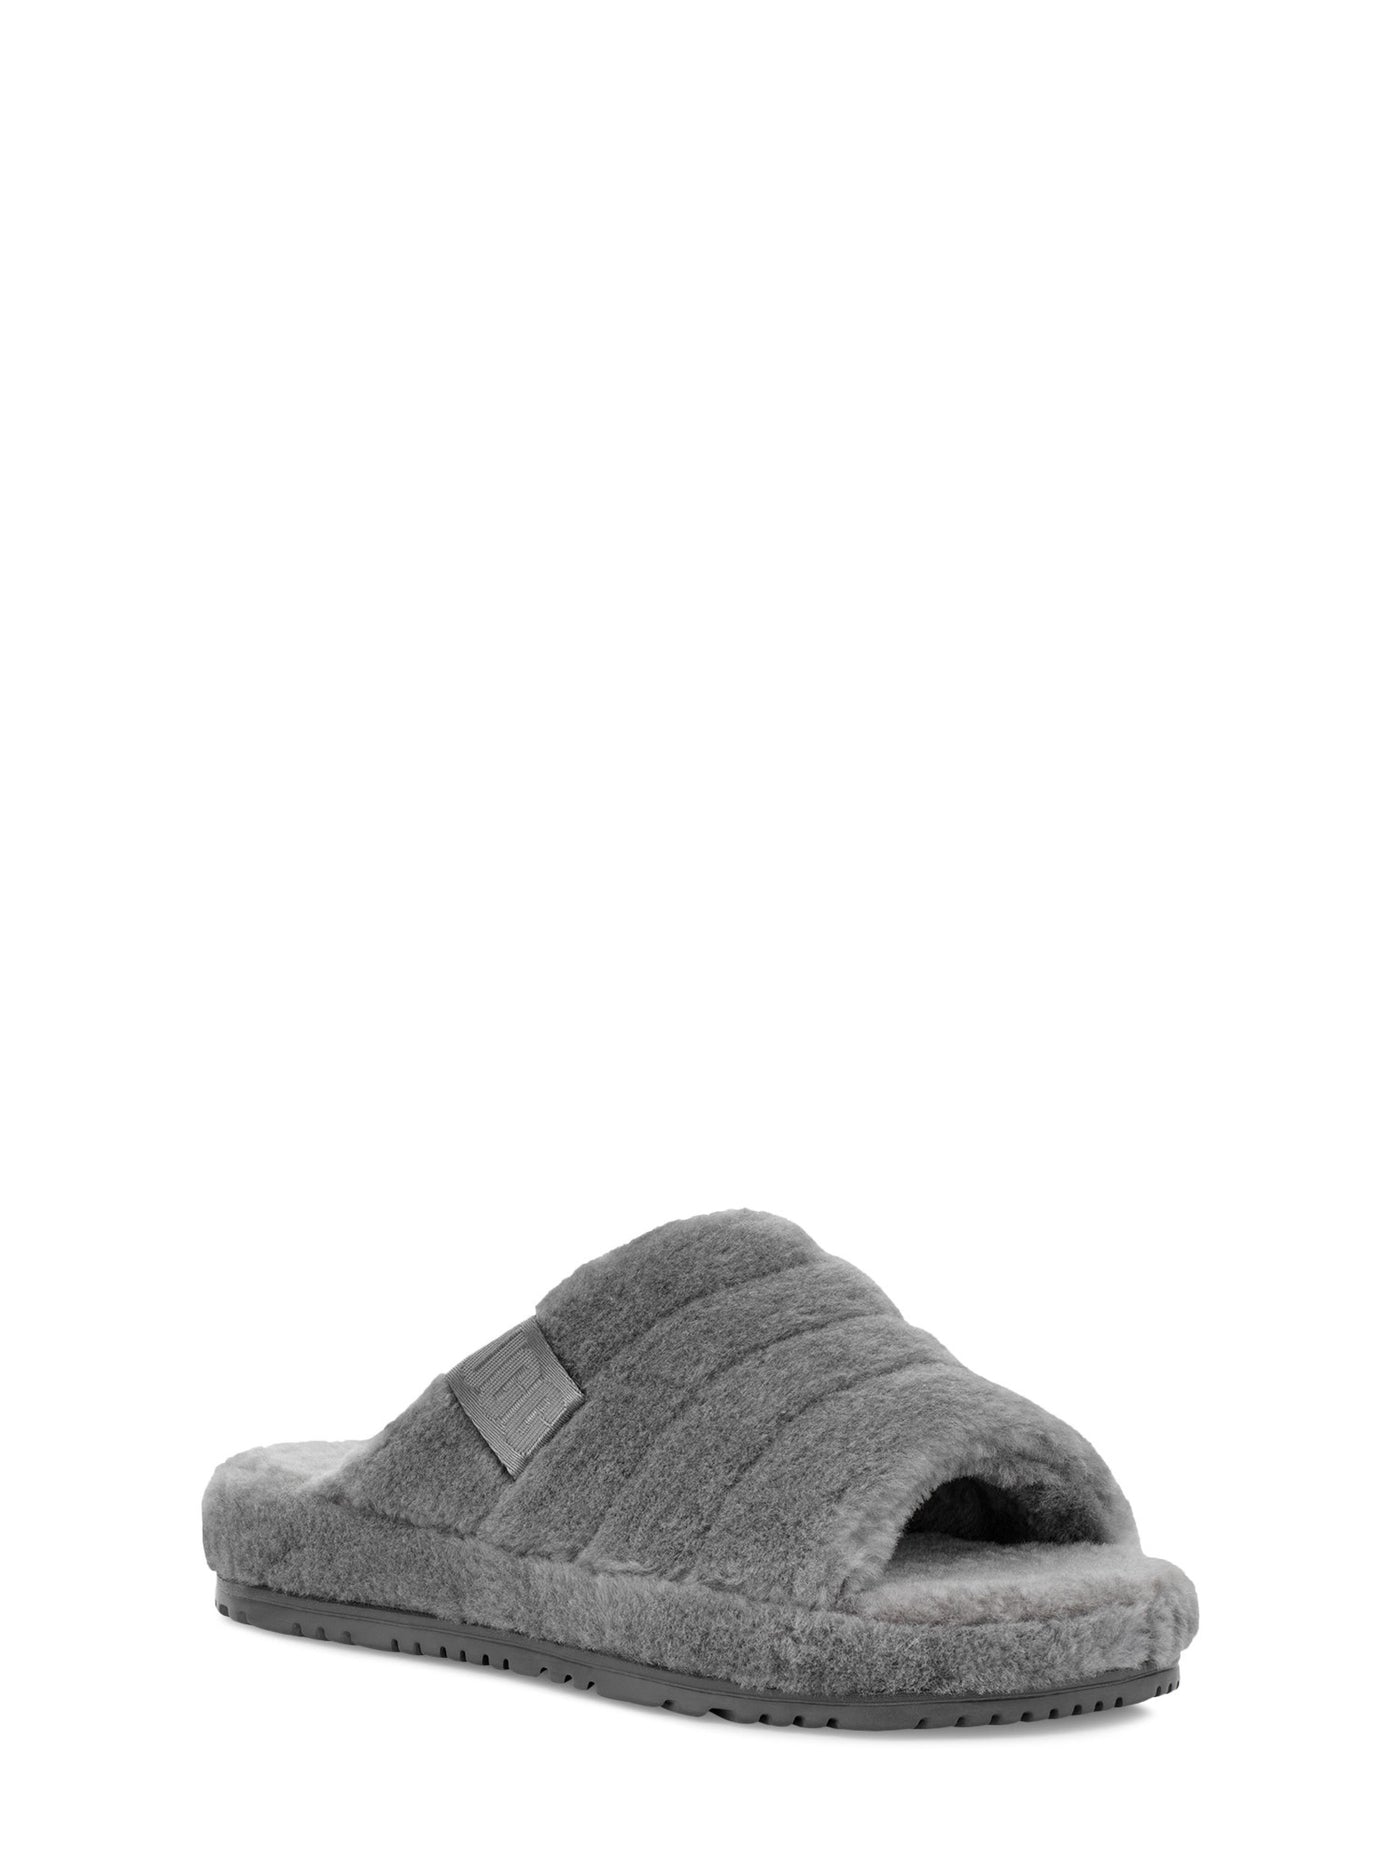 UGG Mens Gray Comfort Fluff You Round Toe Platform Slip On Slippers Shoes 7